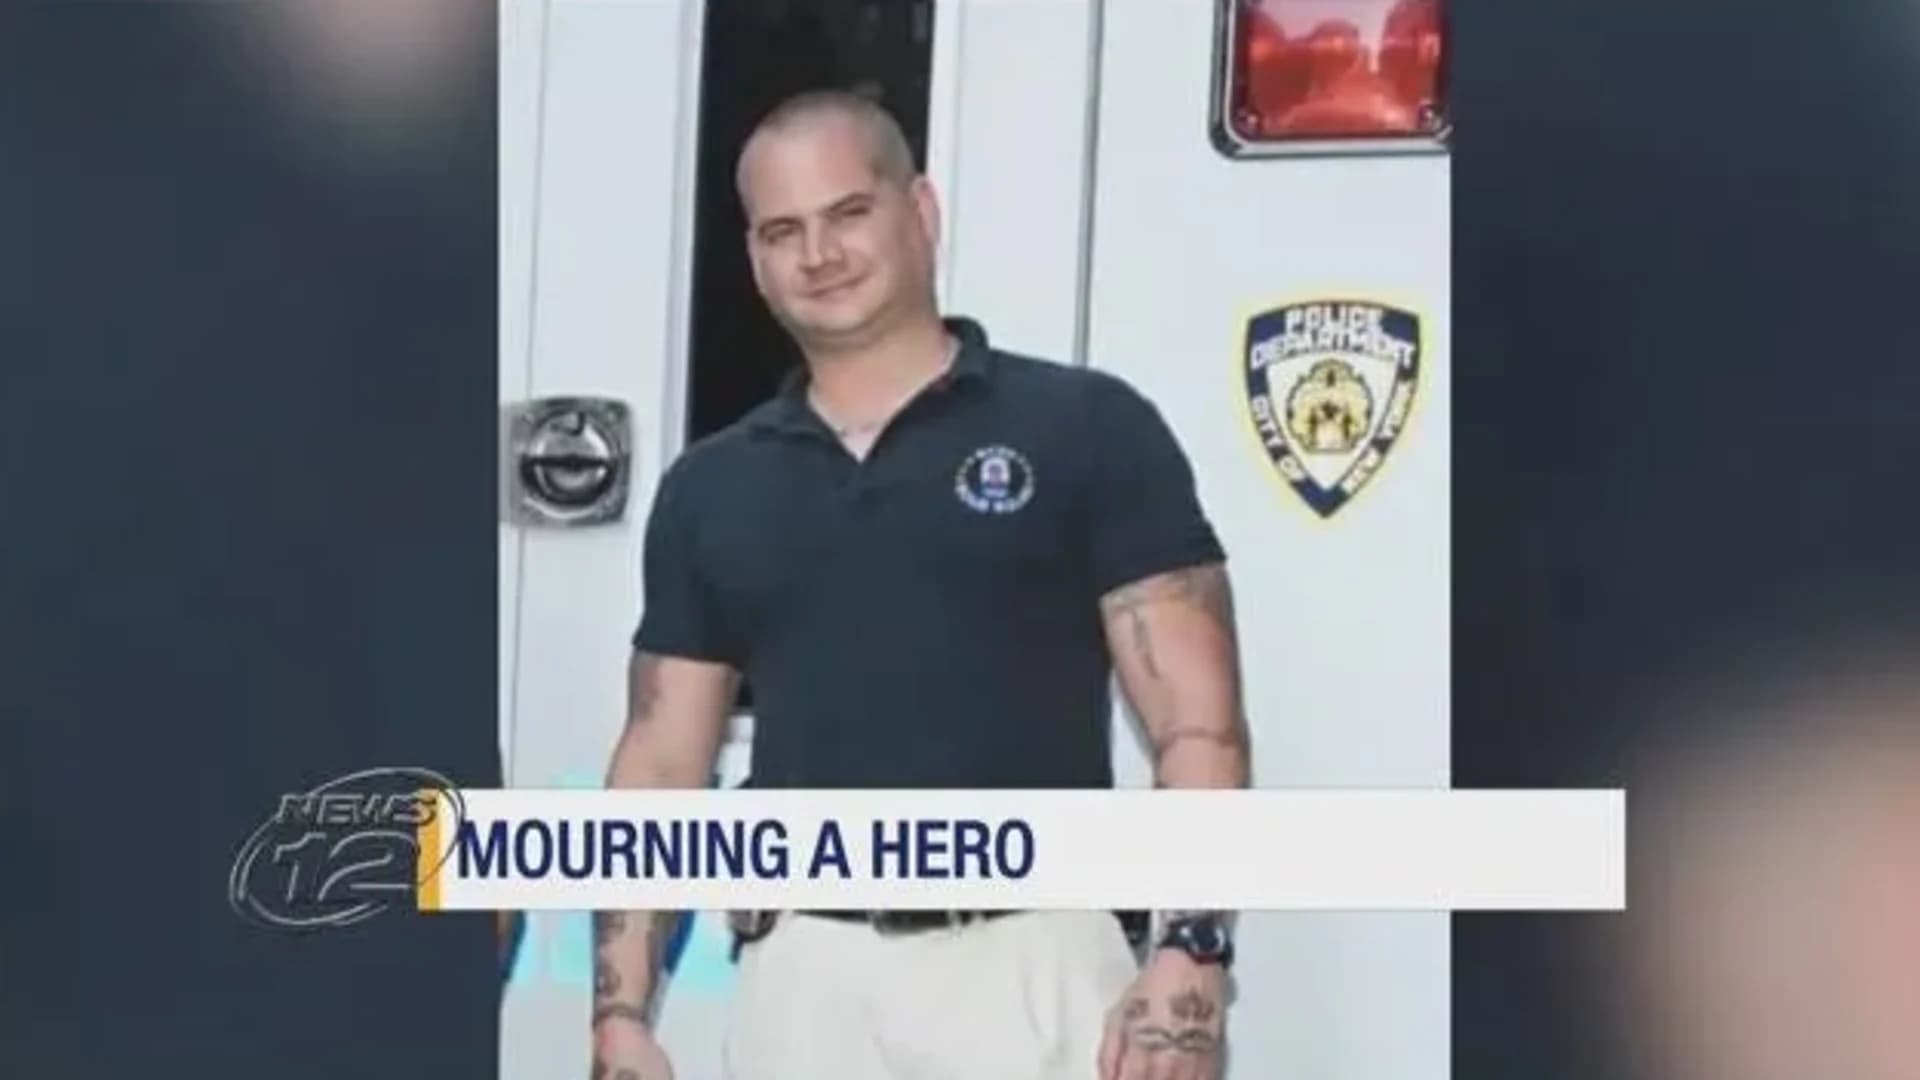 Funeral for 9/11 first responder, activist Luis Alvarez - Live Video